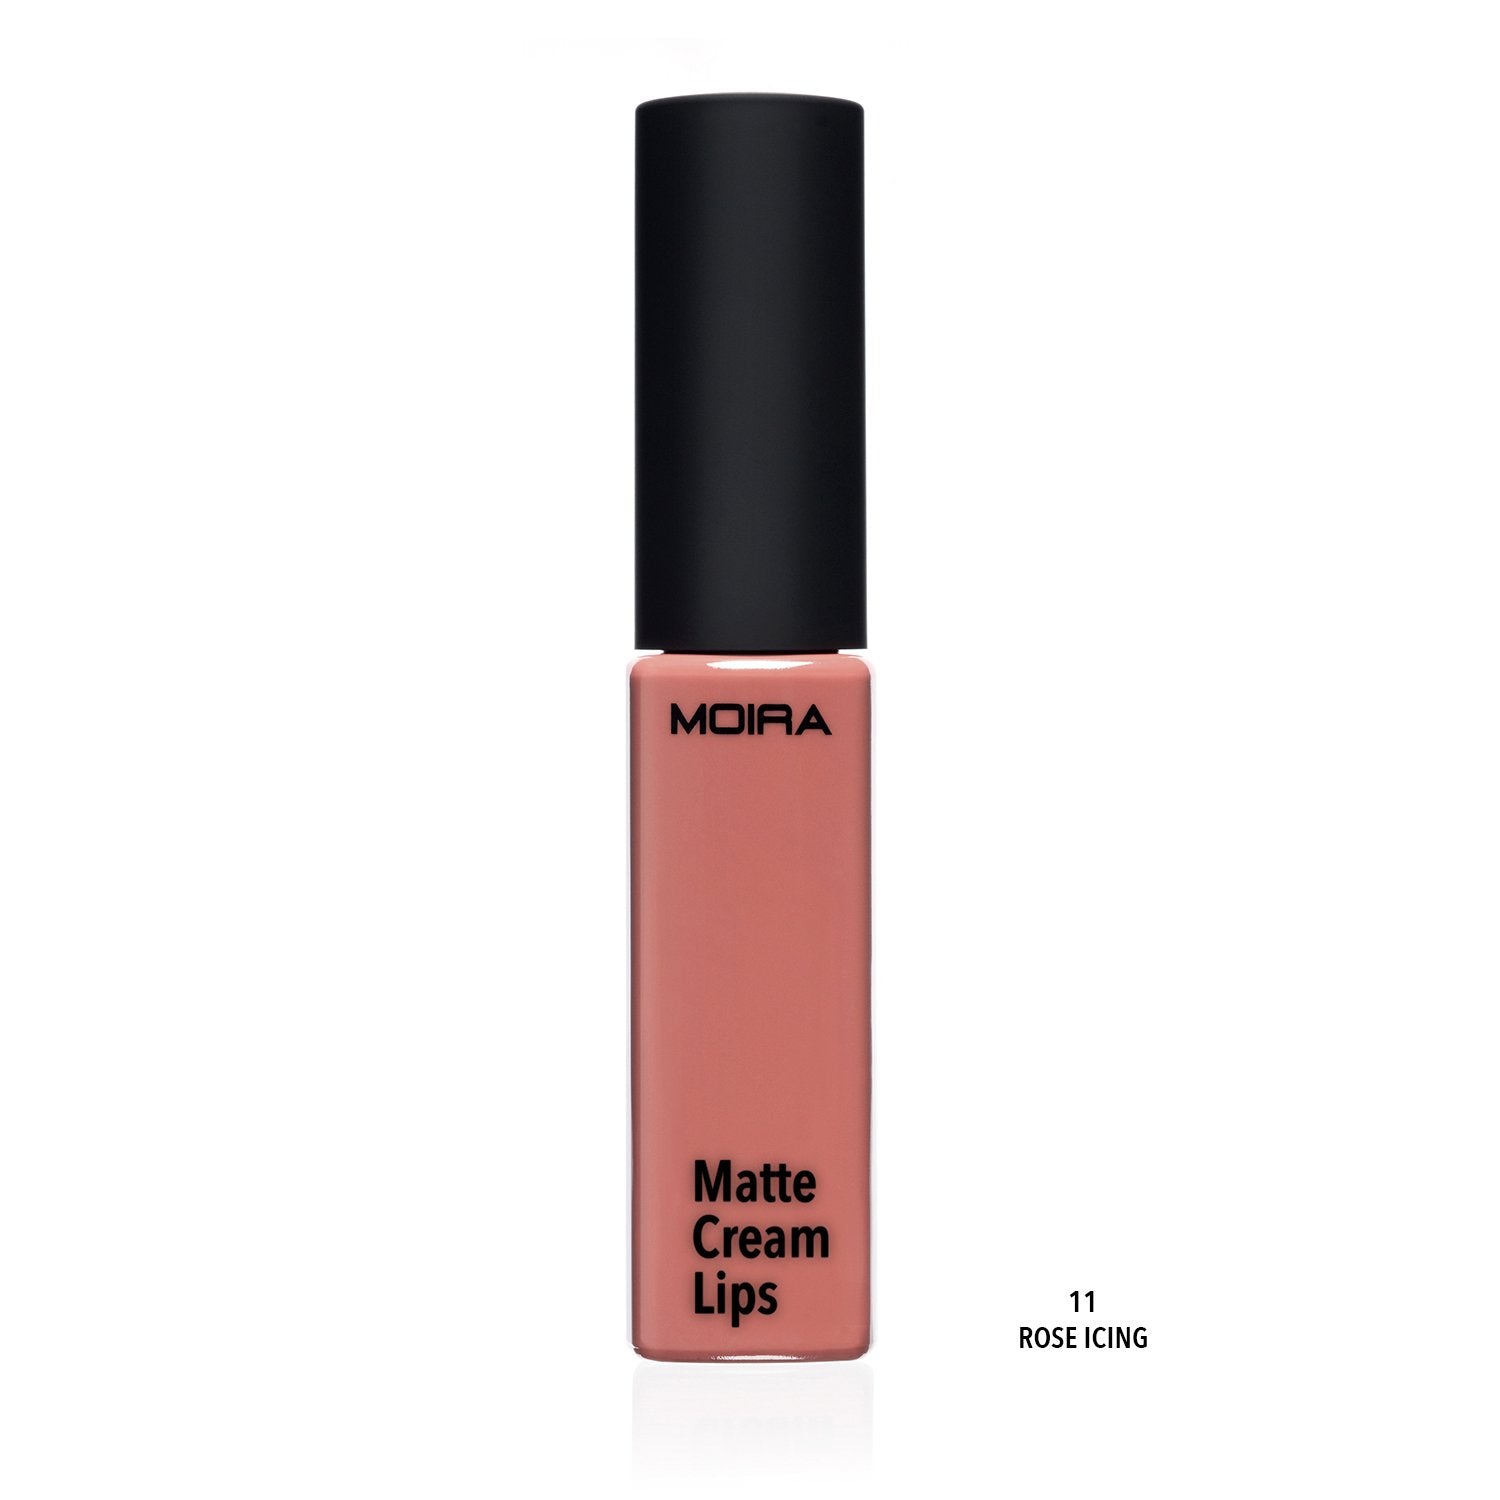 Matte Cream Lips (011, Rose Icing)